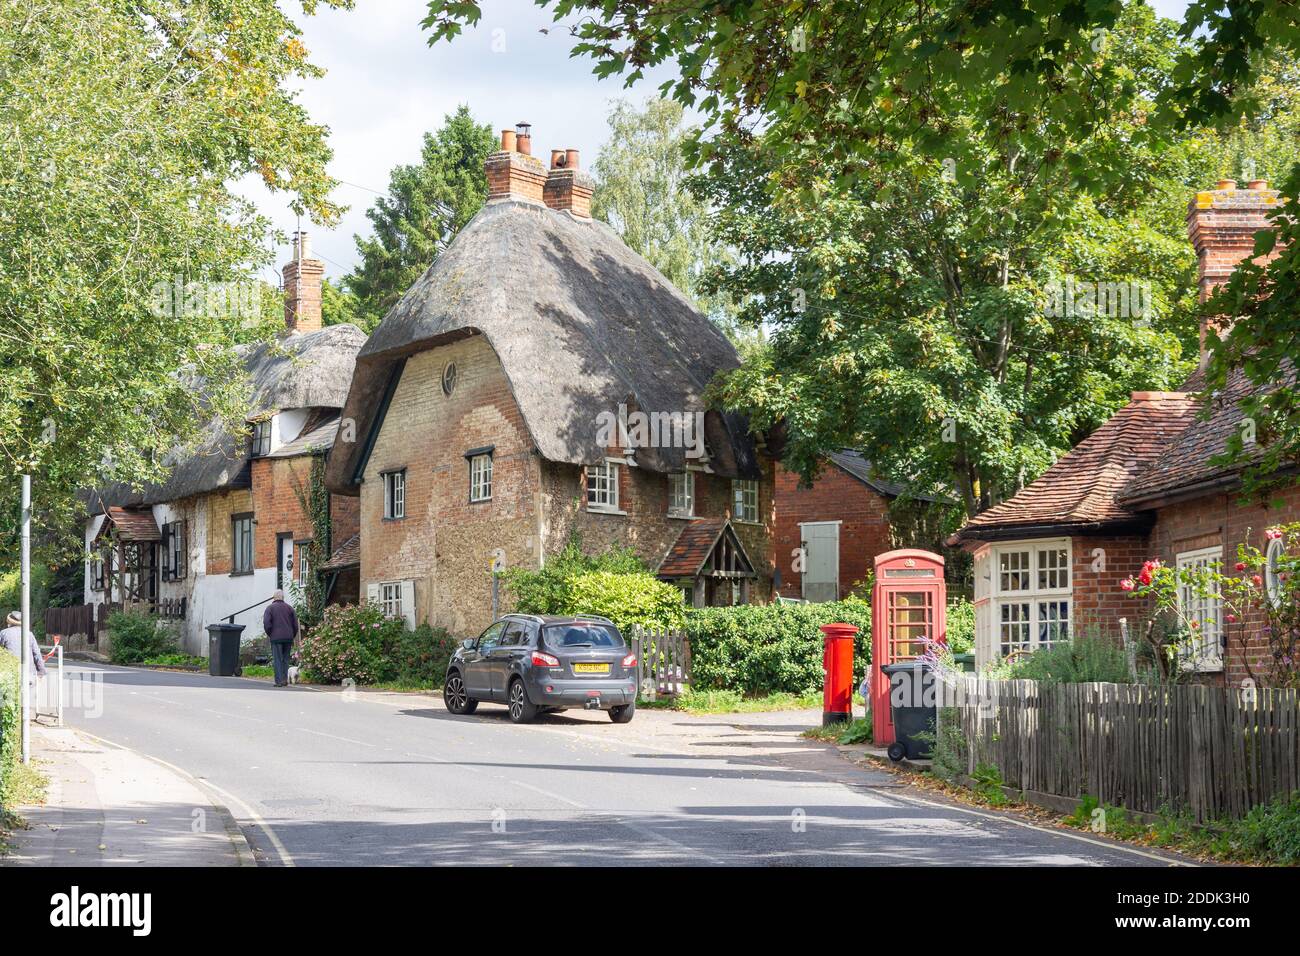 Village shop and cottages, Clifton Hampden, Oxfordshire, England, United Kingdom Stock Photo